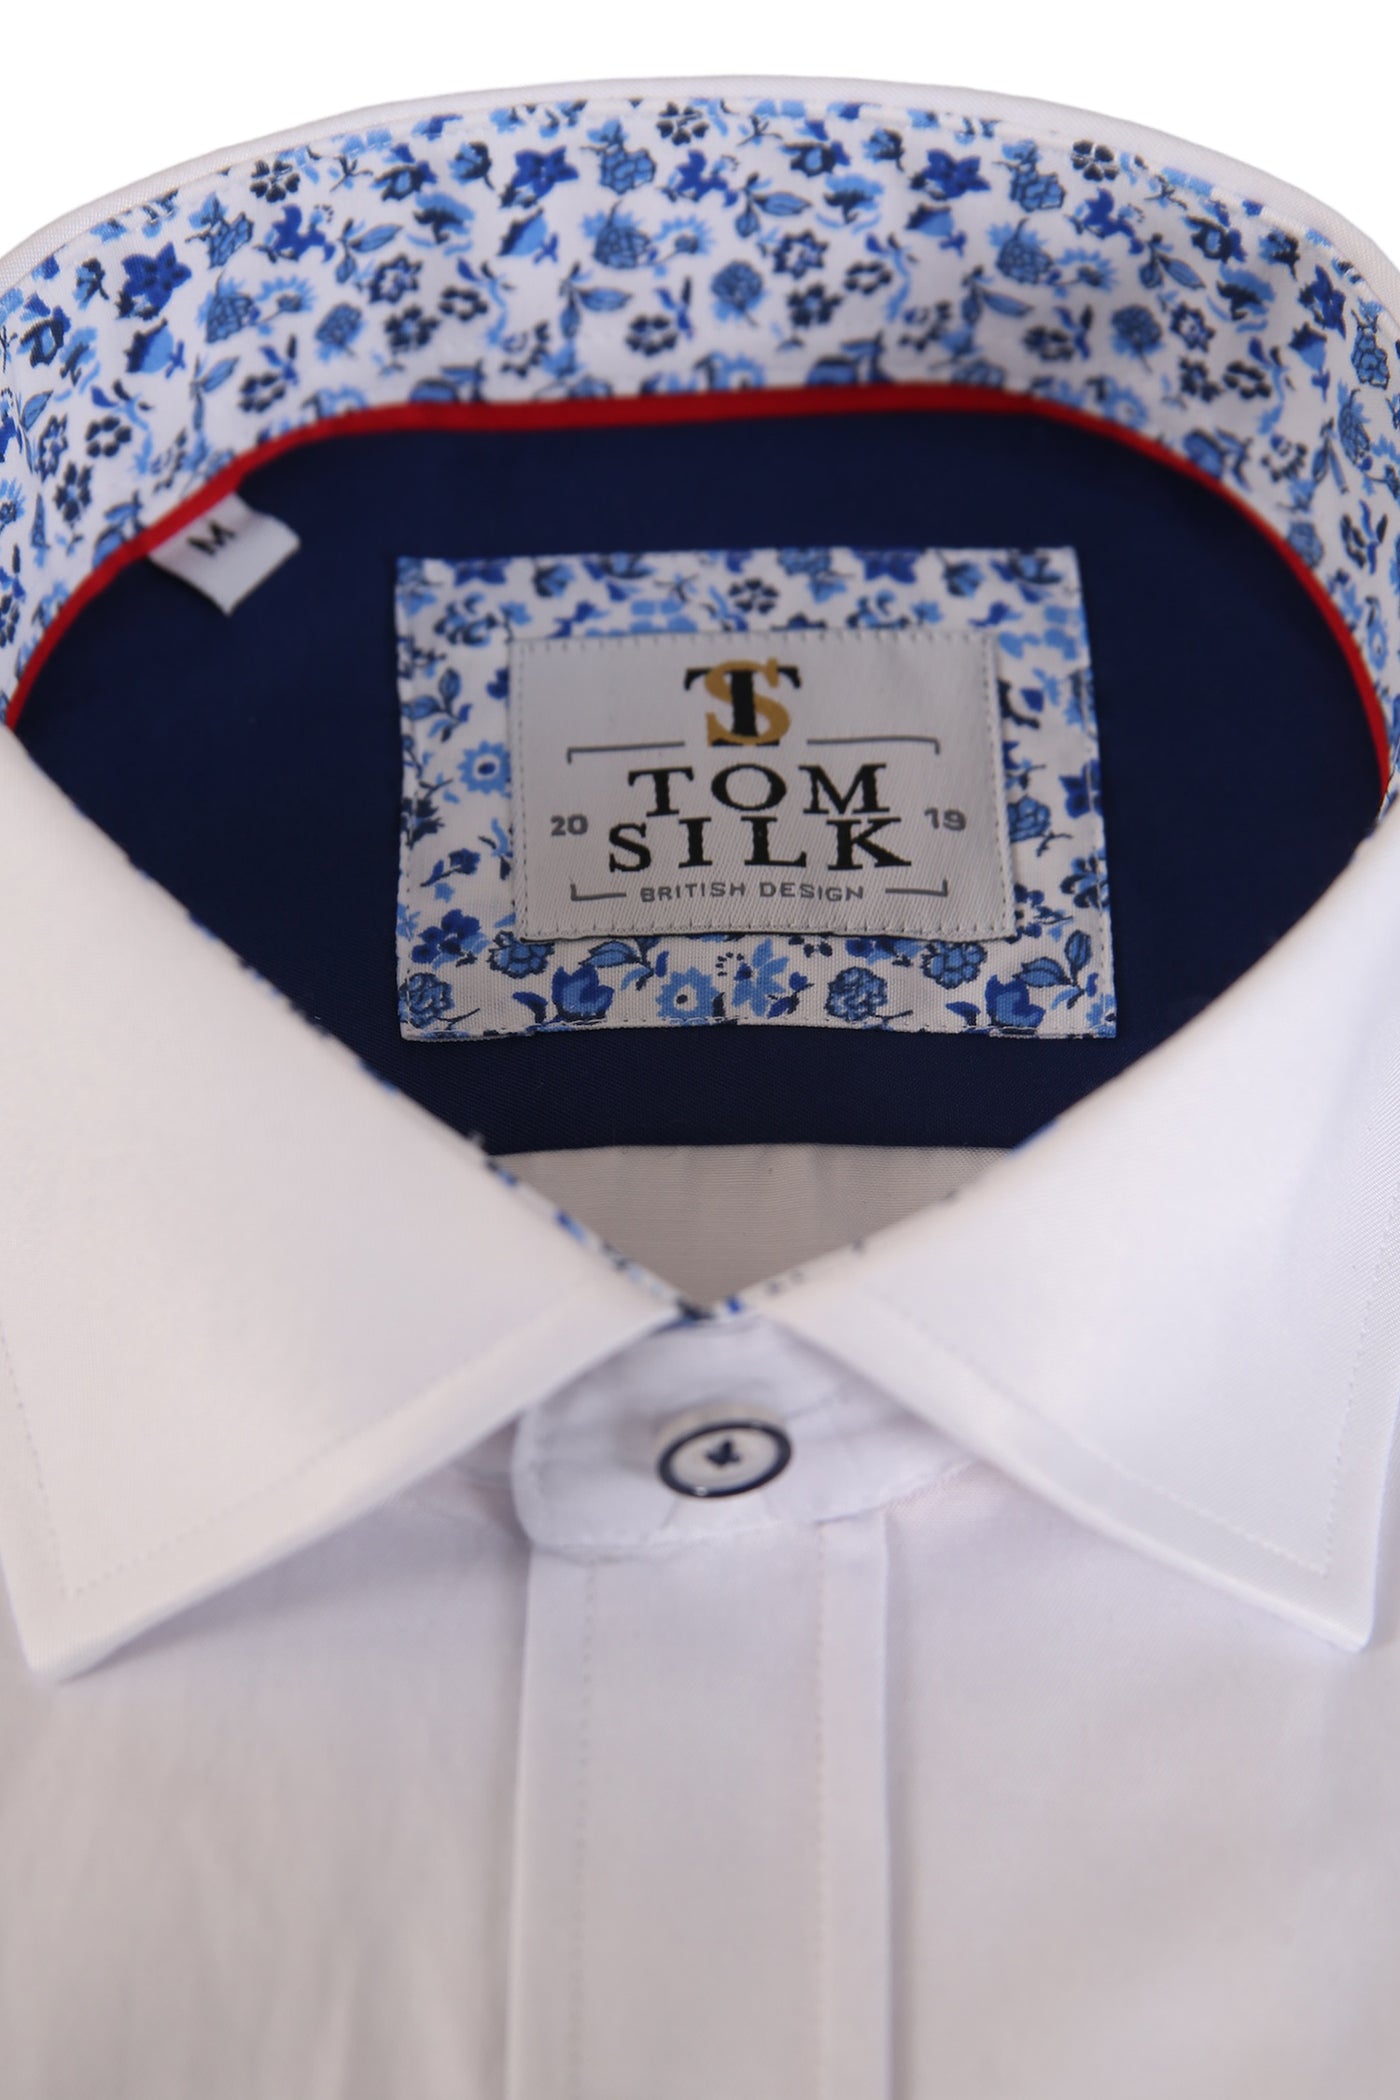 Tom Silk - White Contrast Button Long Sleeve Shirt